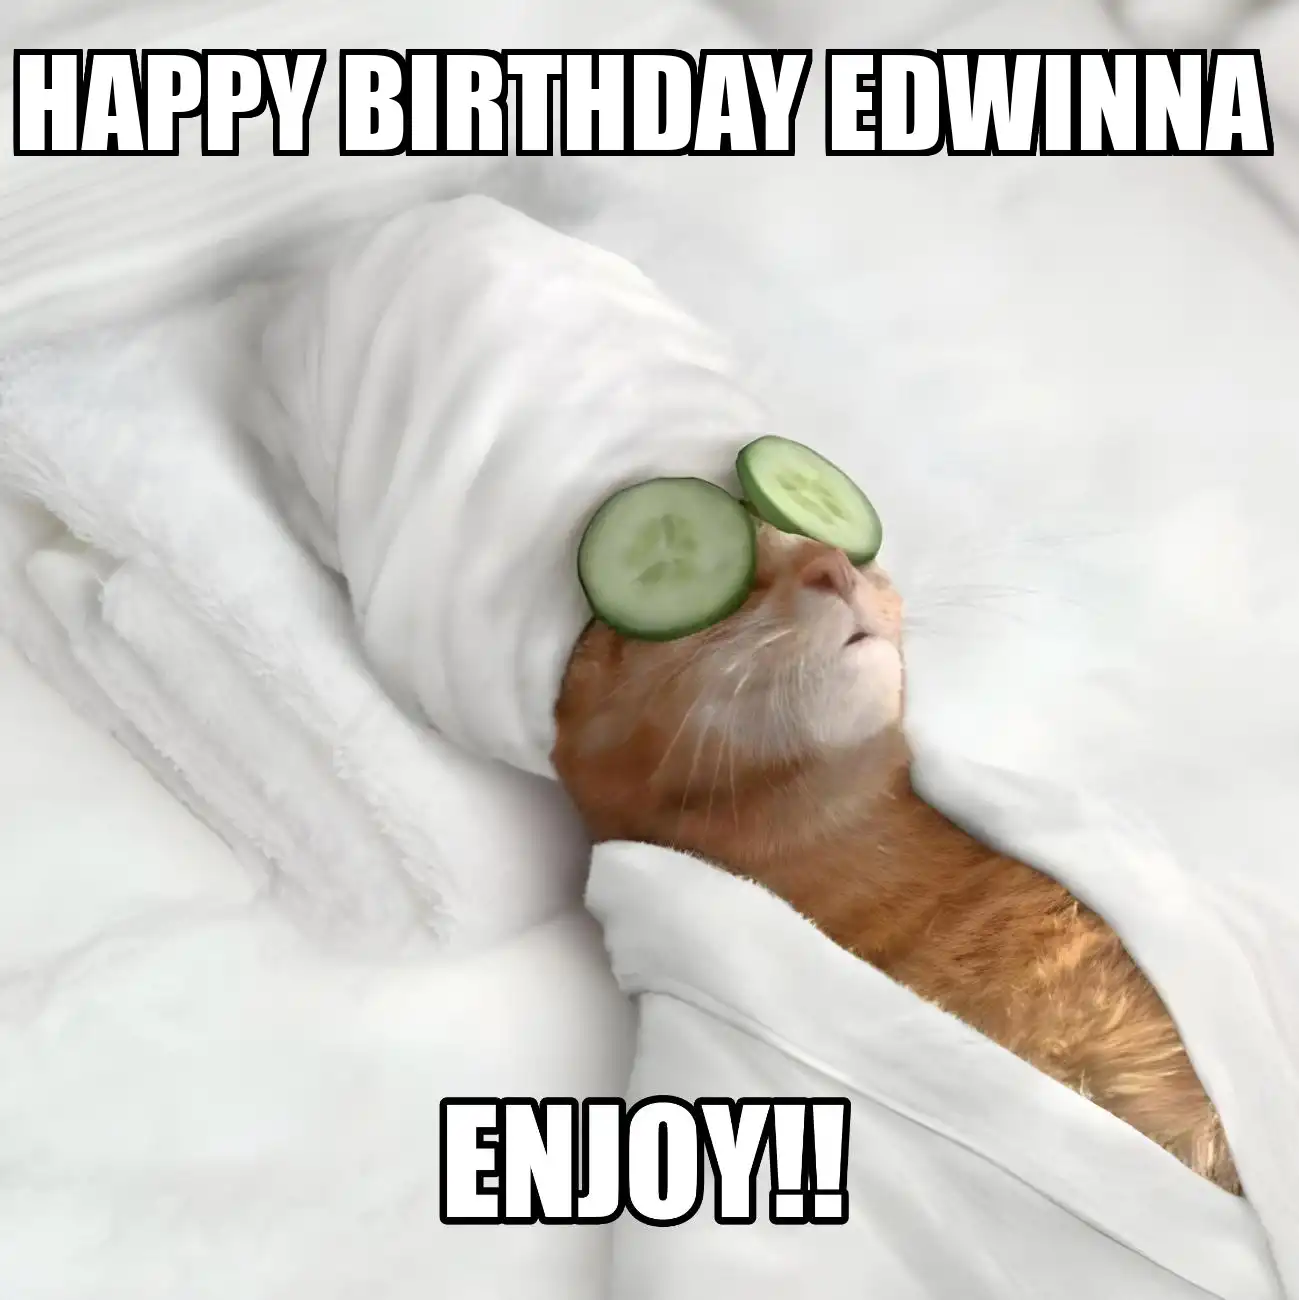 Happy Birthday Edwinna Enjoy Cat Meme